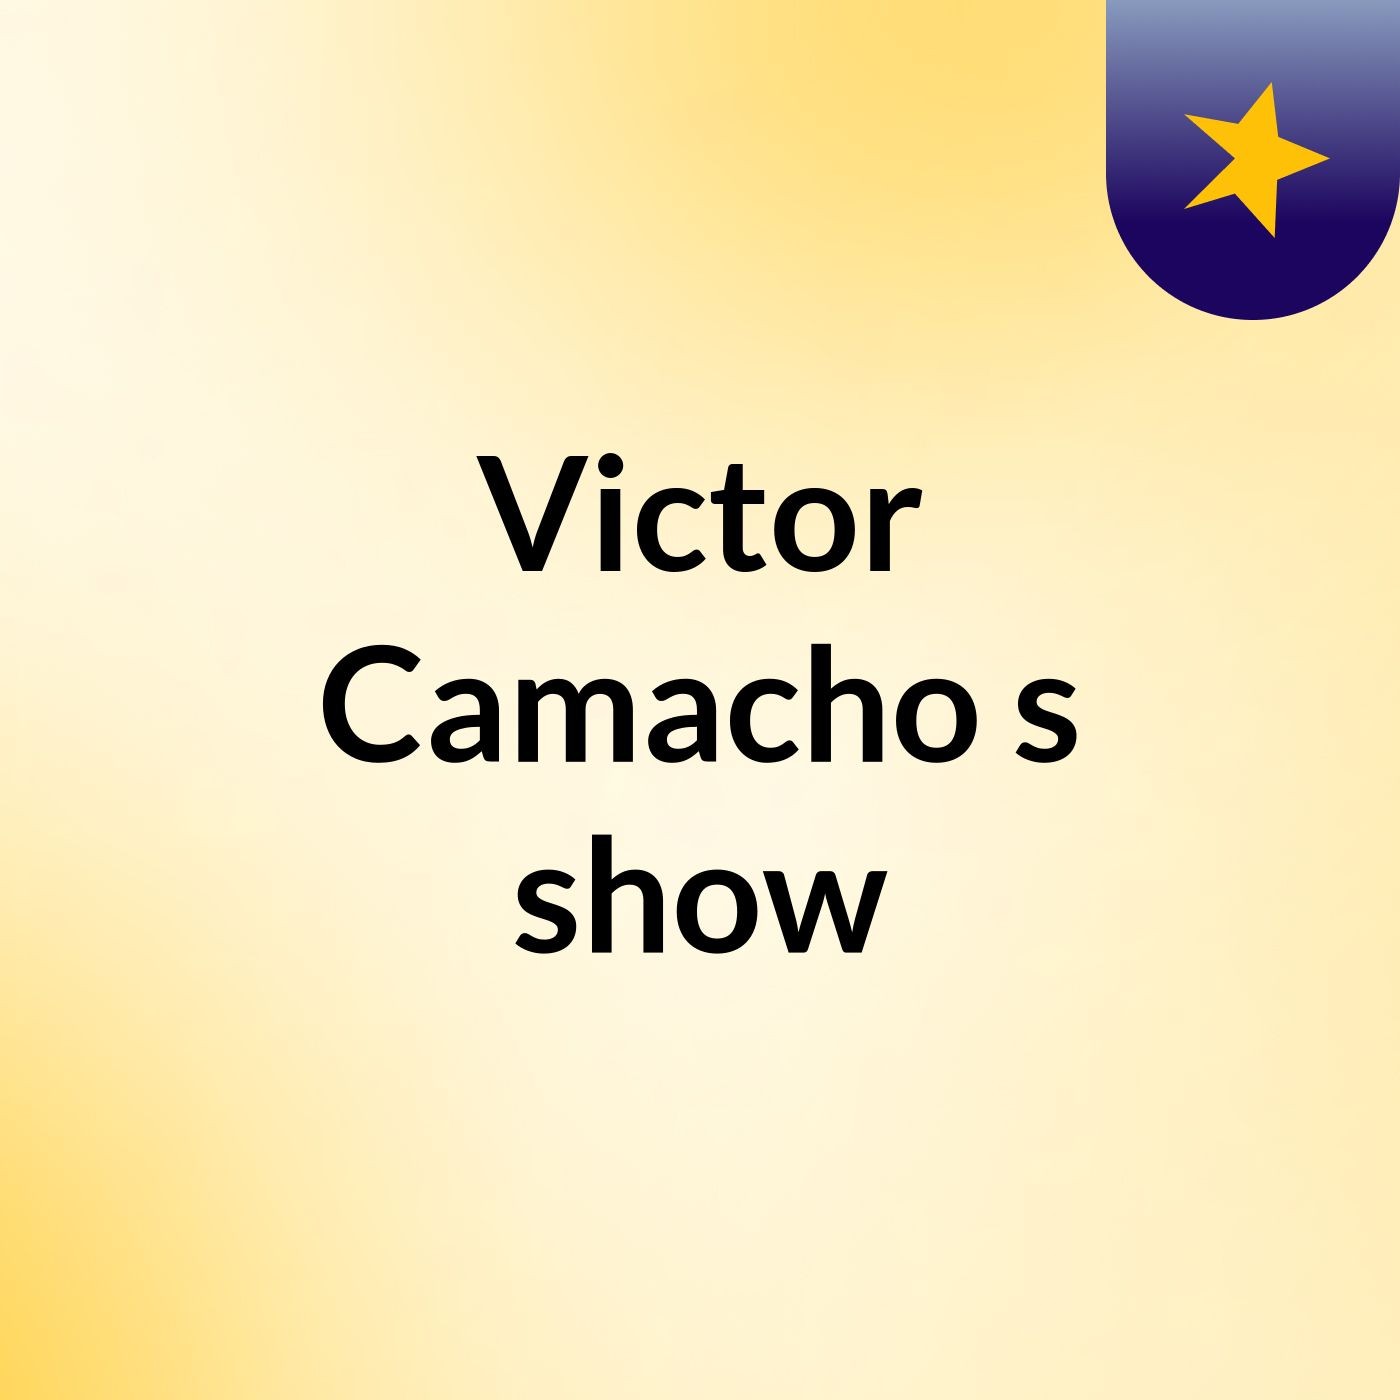 Victor Camacho's show